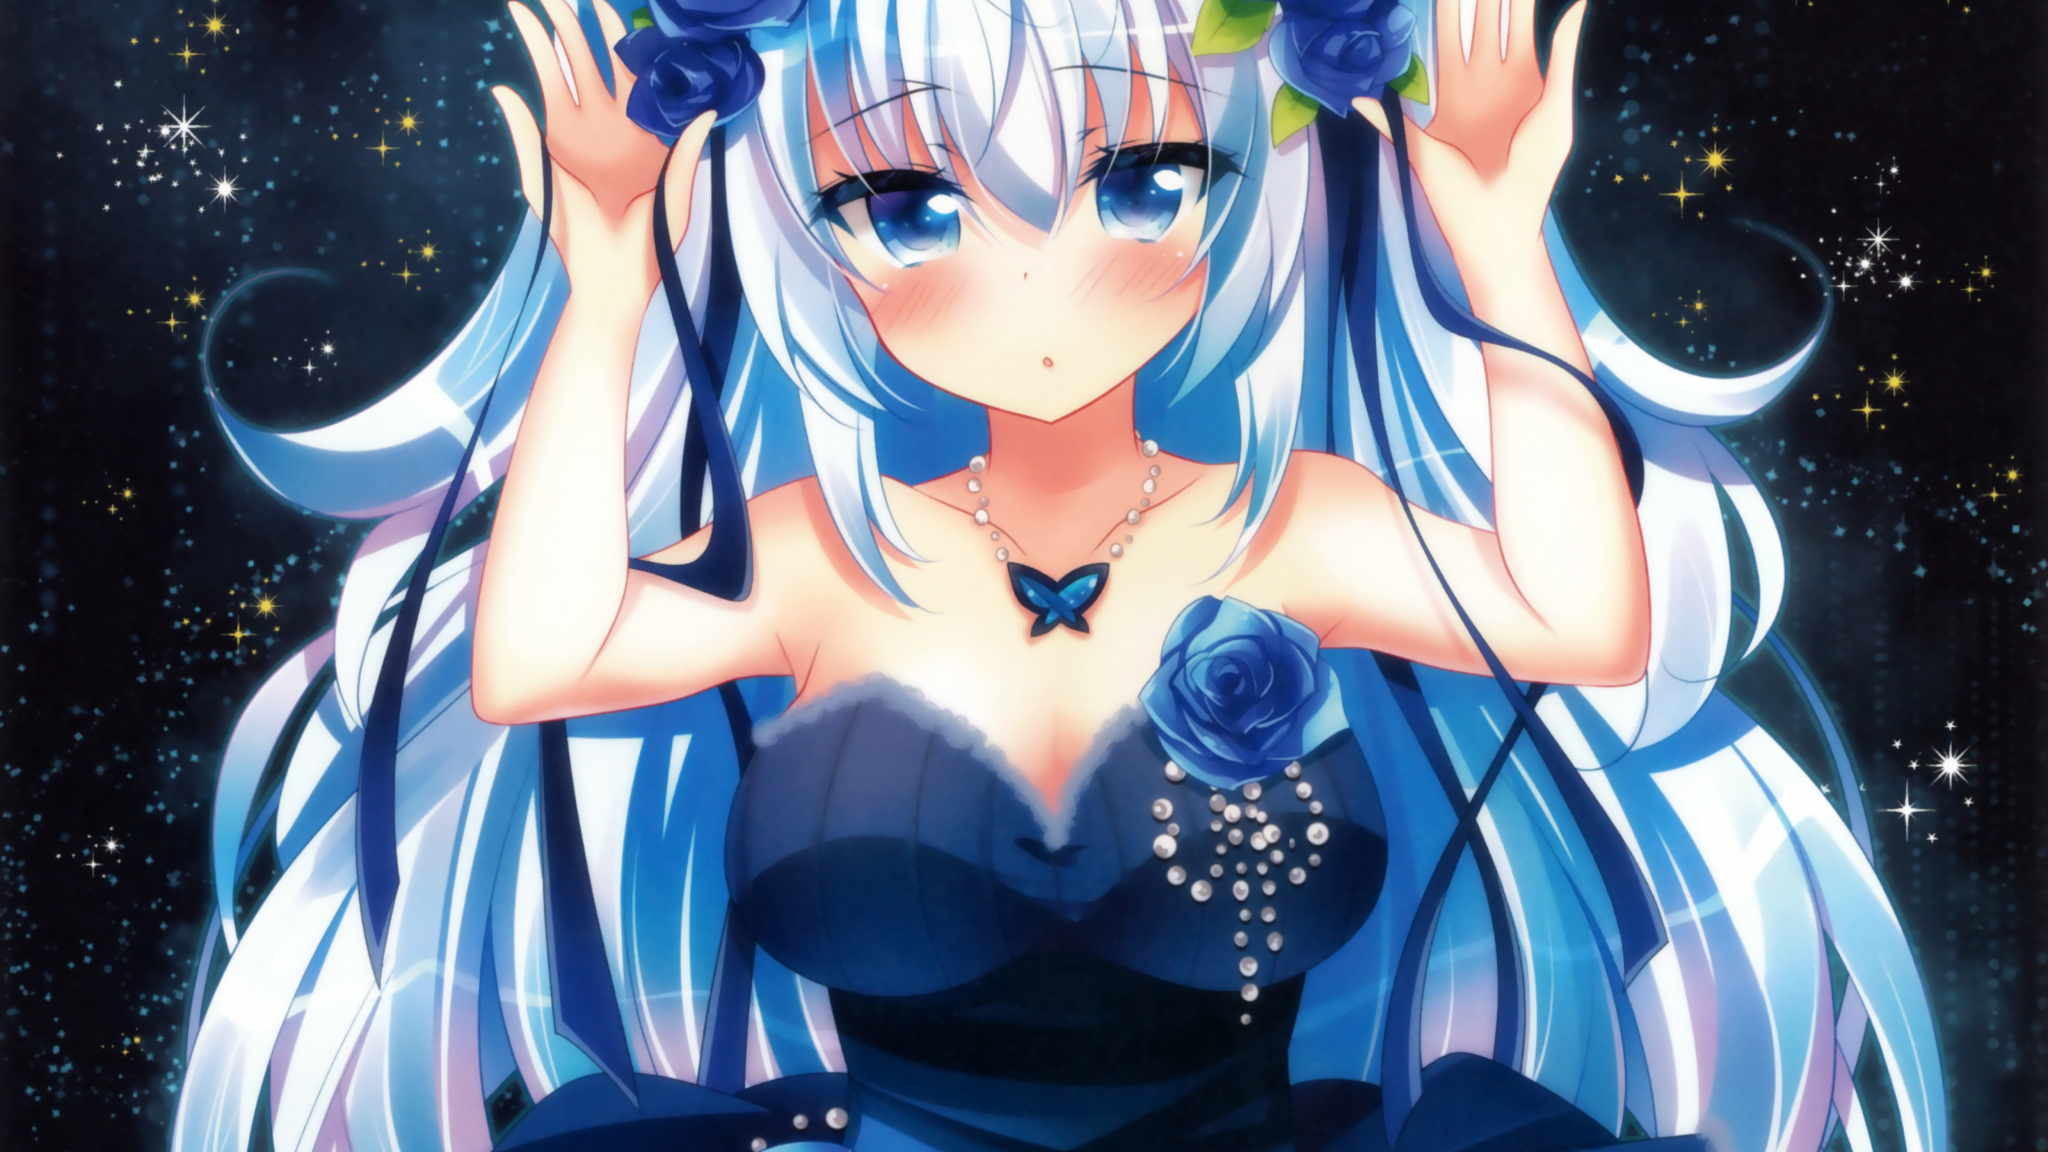 Desktop Wallpaper Blue Hair Blue Eyes Original Anime Girl Hd Image Picture Background Ljgrqu